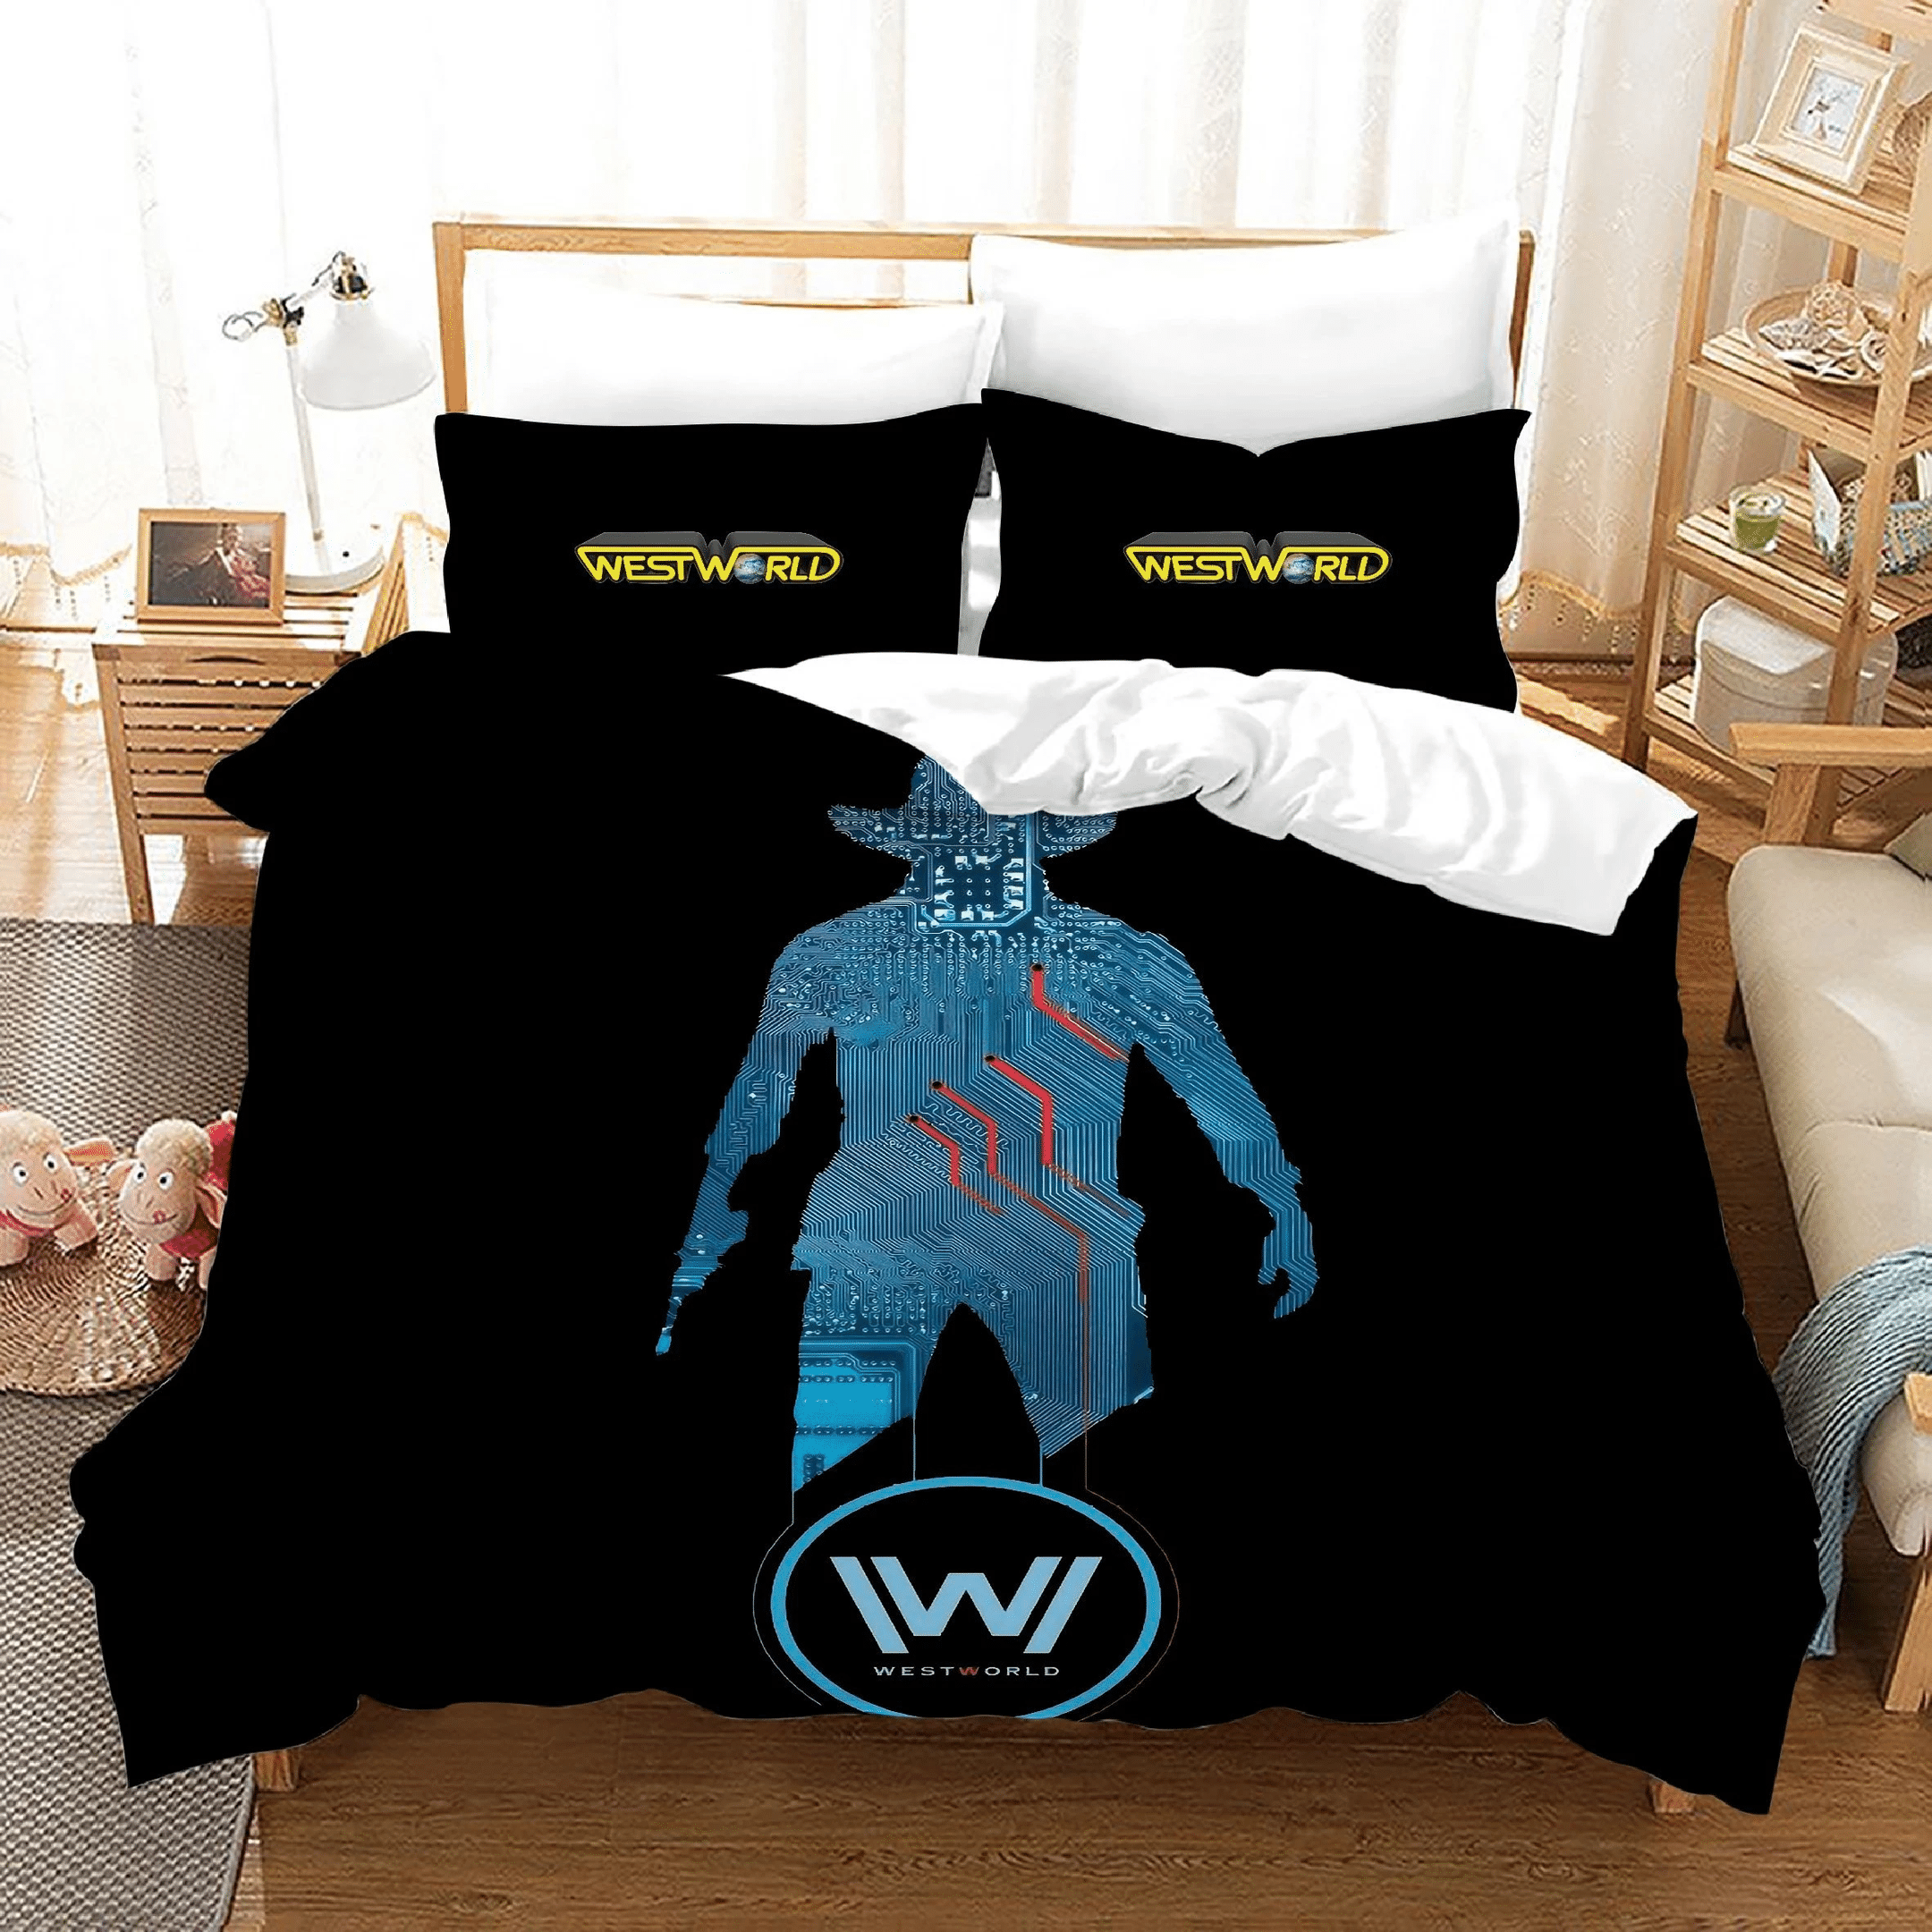 Westworld 4 Duvet Cover Pillowcase Bedding Sets Home Bedroom Decor